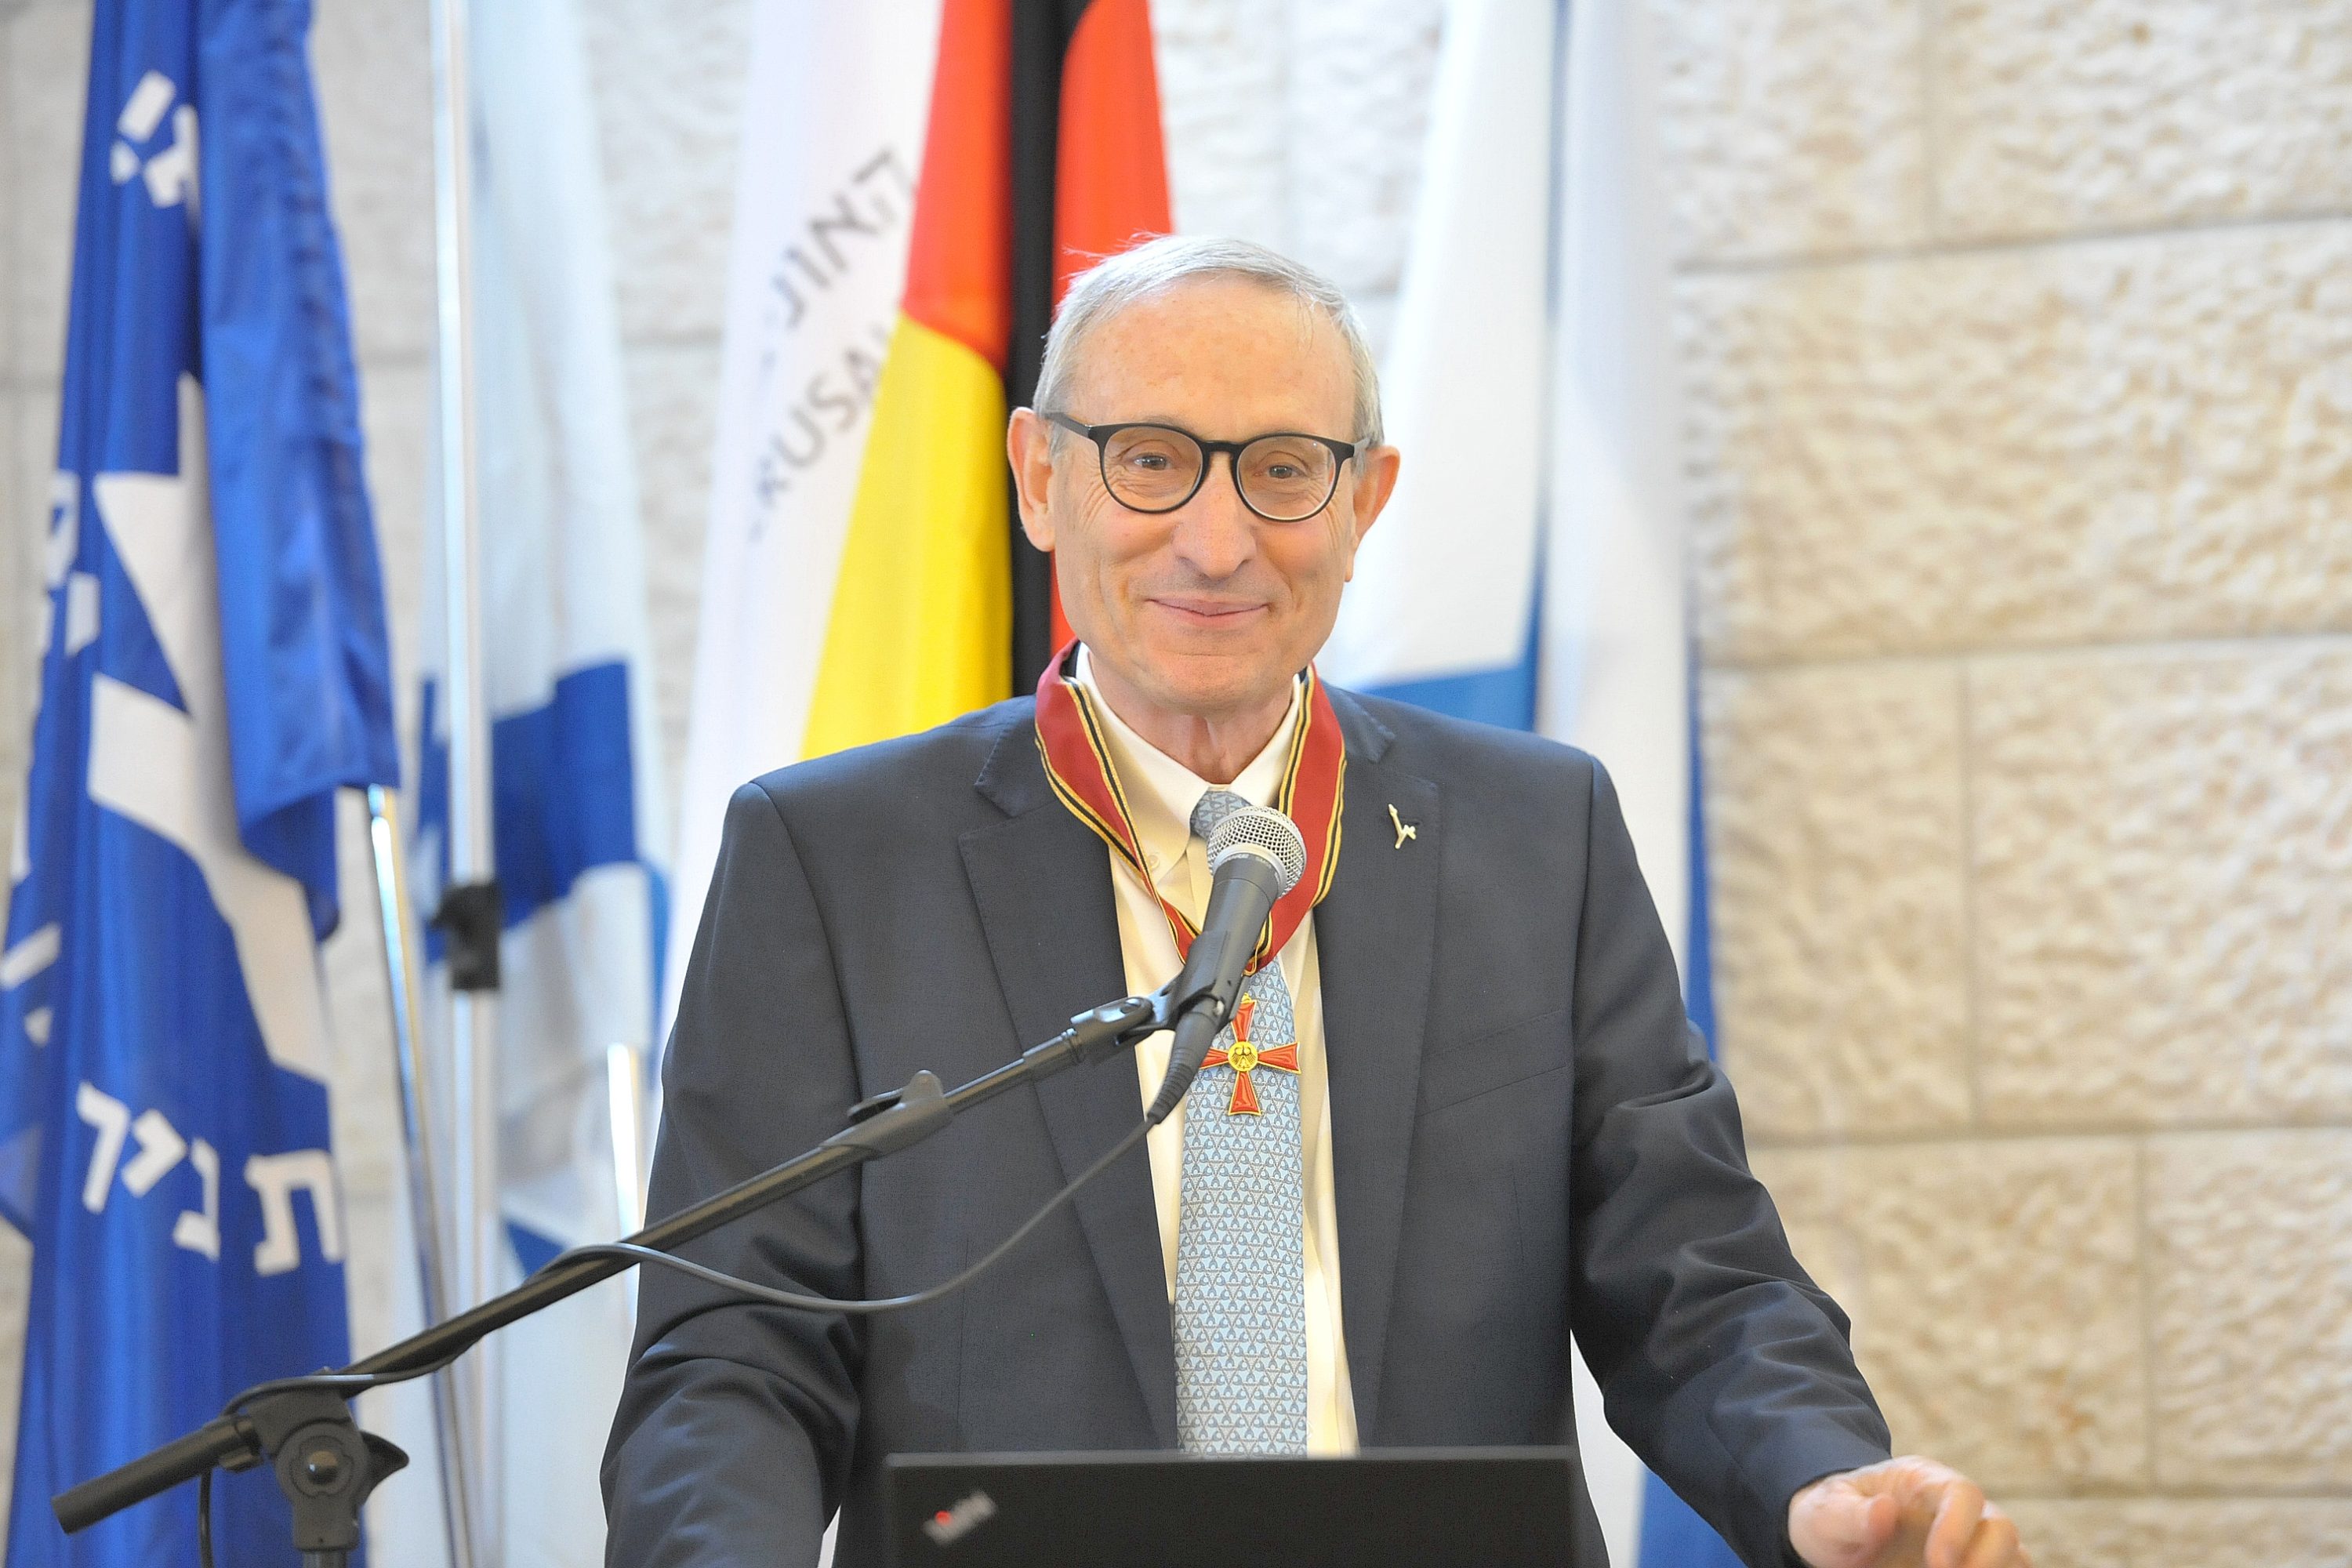 Prof. Menahem Ben-Sasson, President of the Hebrew University of Jerusalem (Photo by Bruno Charbit for Hebrew University) 